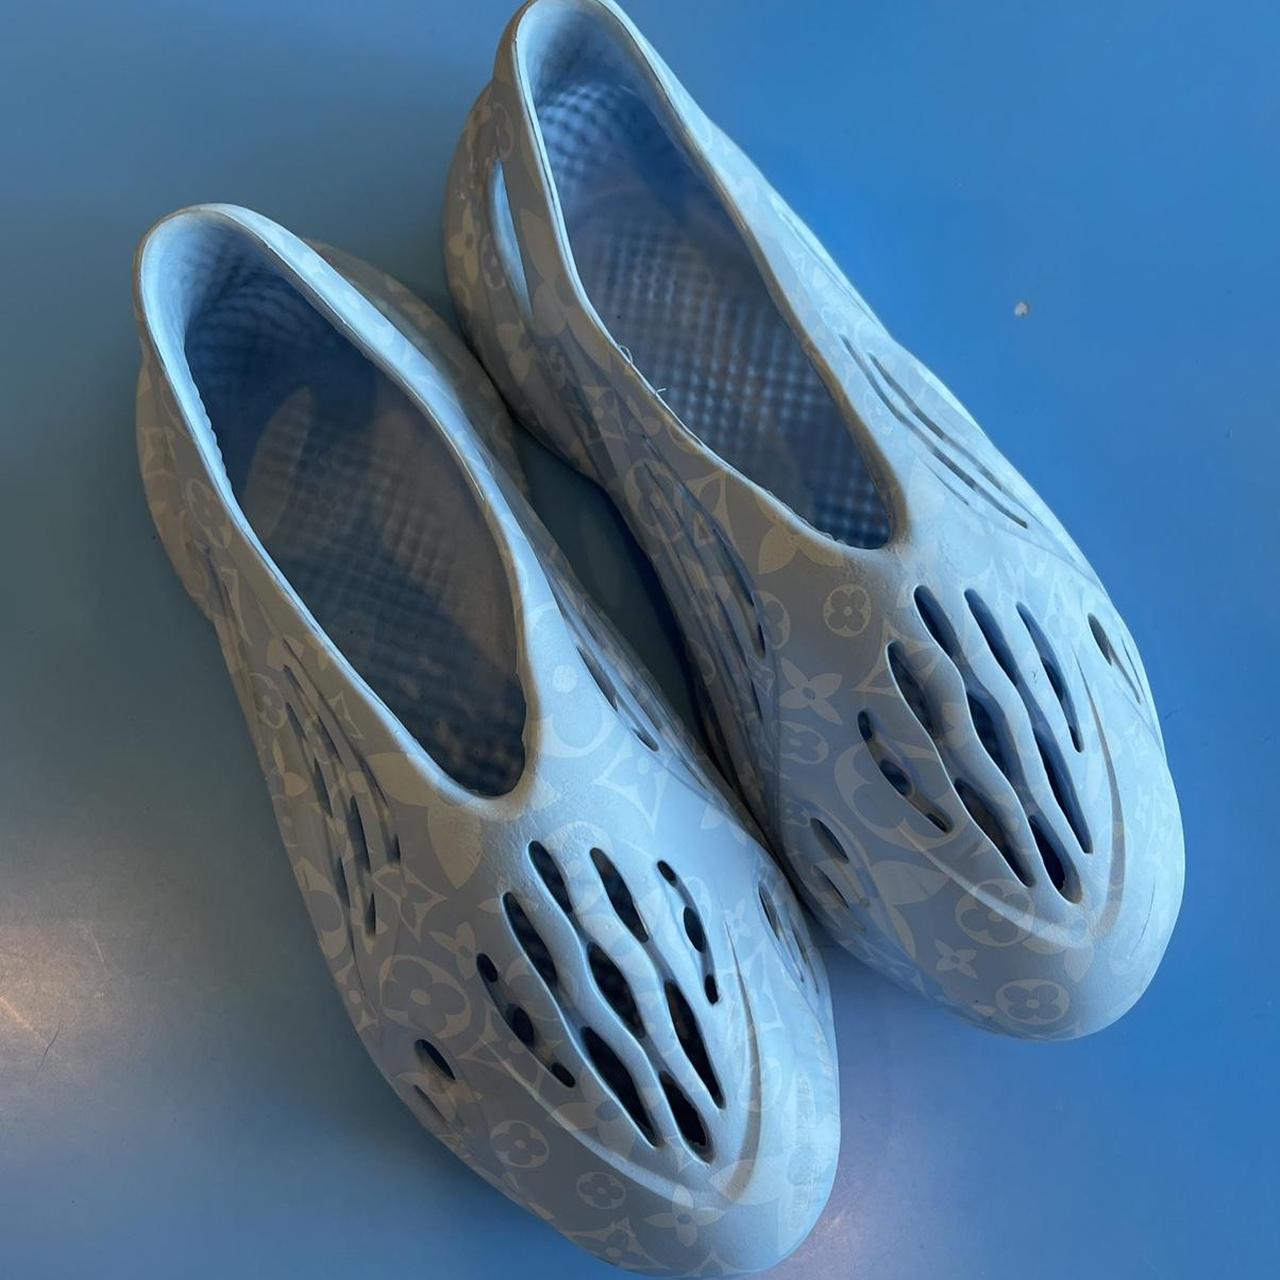 Crocs Imran Caveman Potato Slippers ( White ) Size-Small (6-8 )